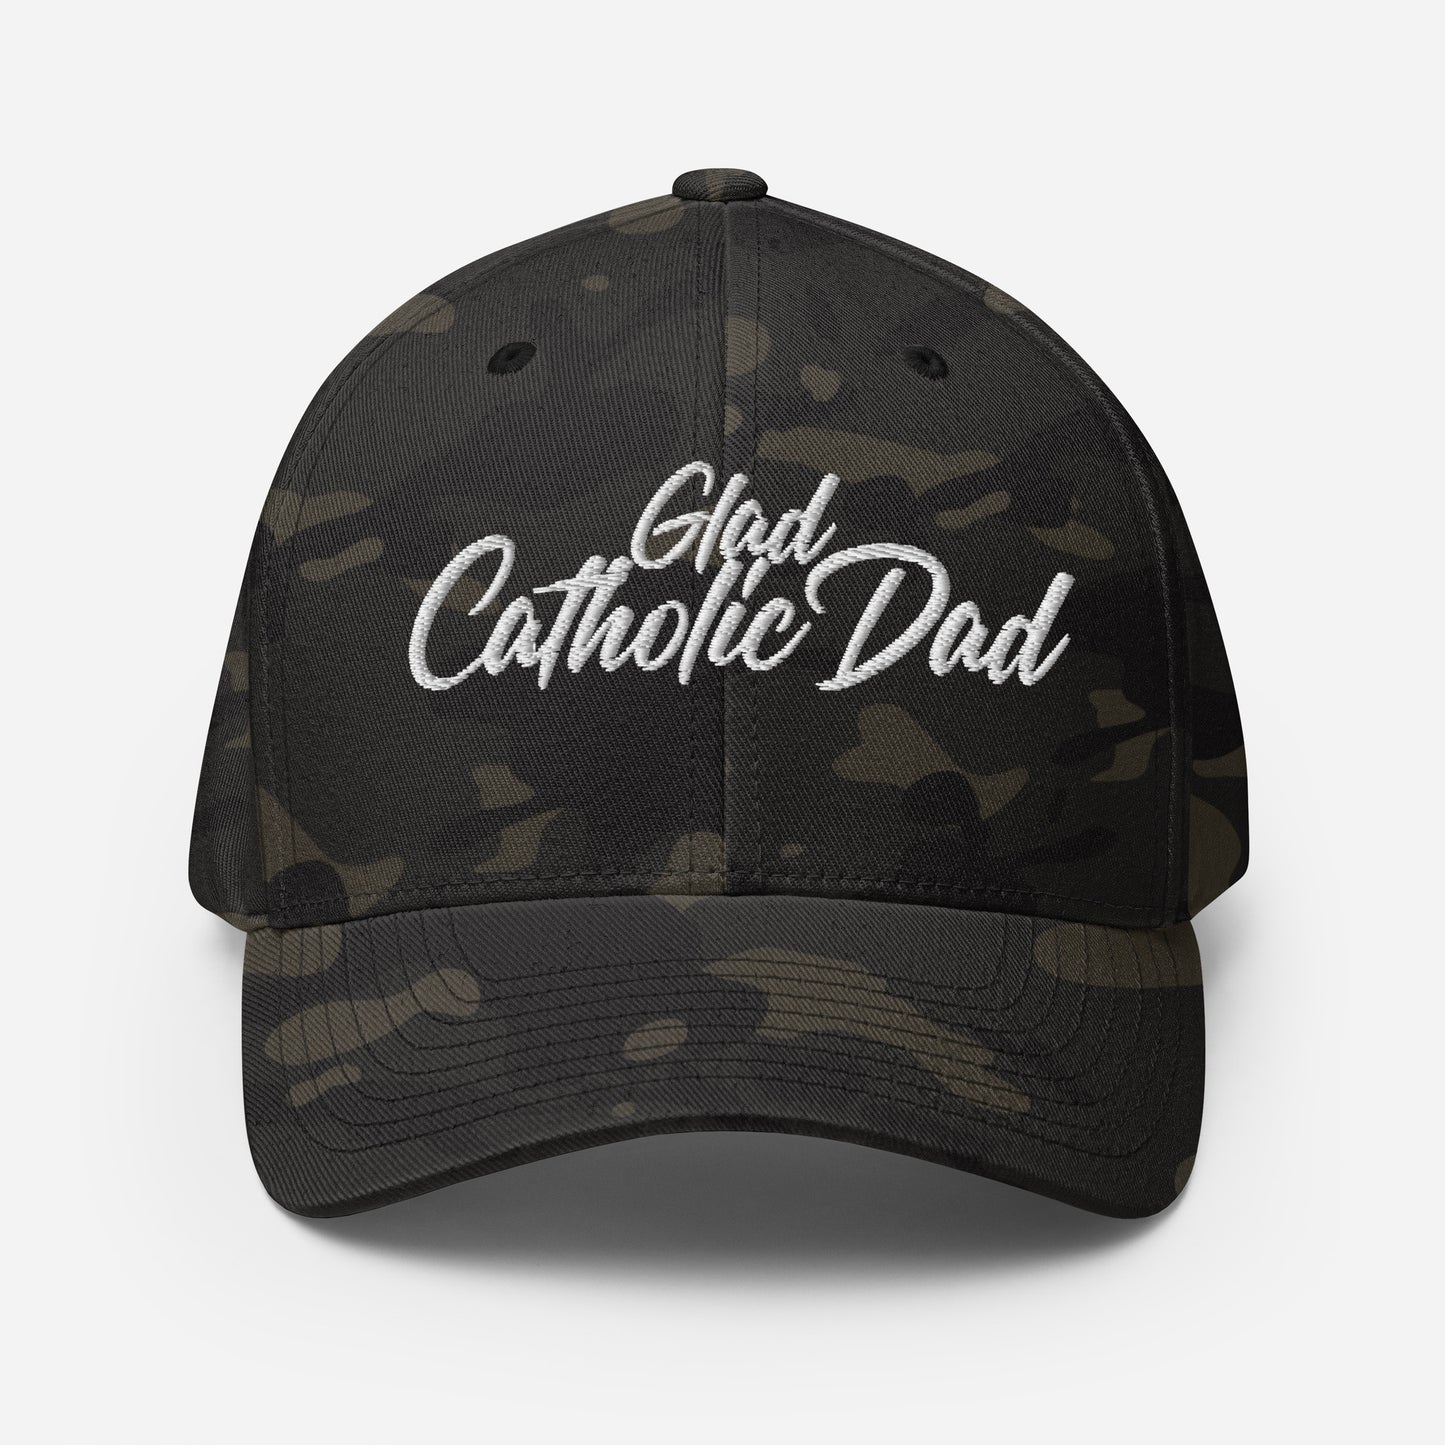 Glad Catholic Dads - Structured Twill Cap